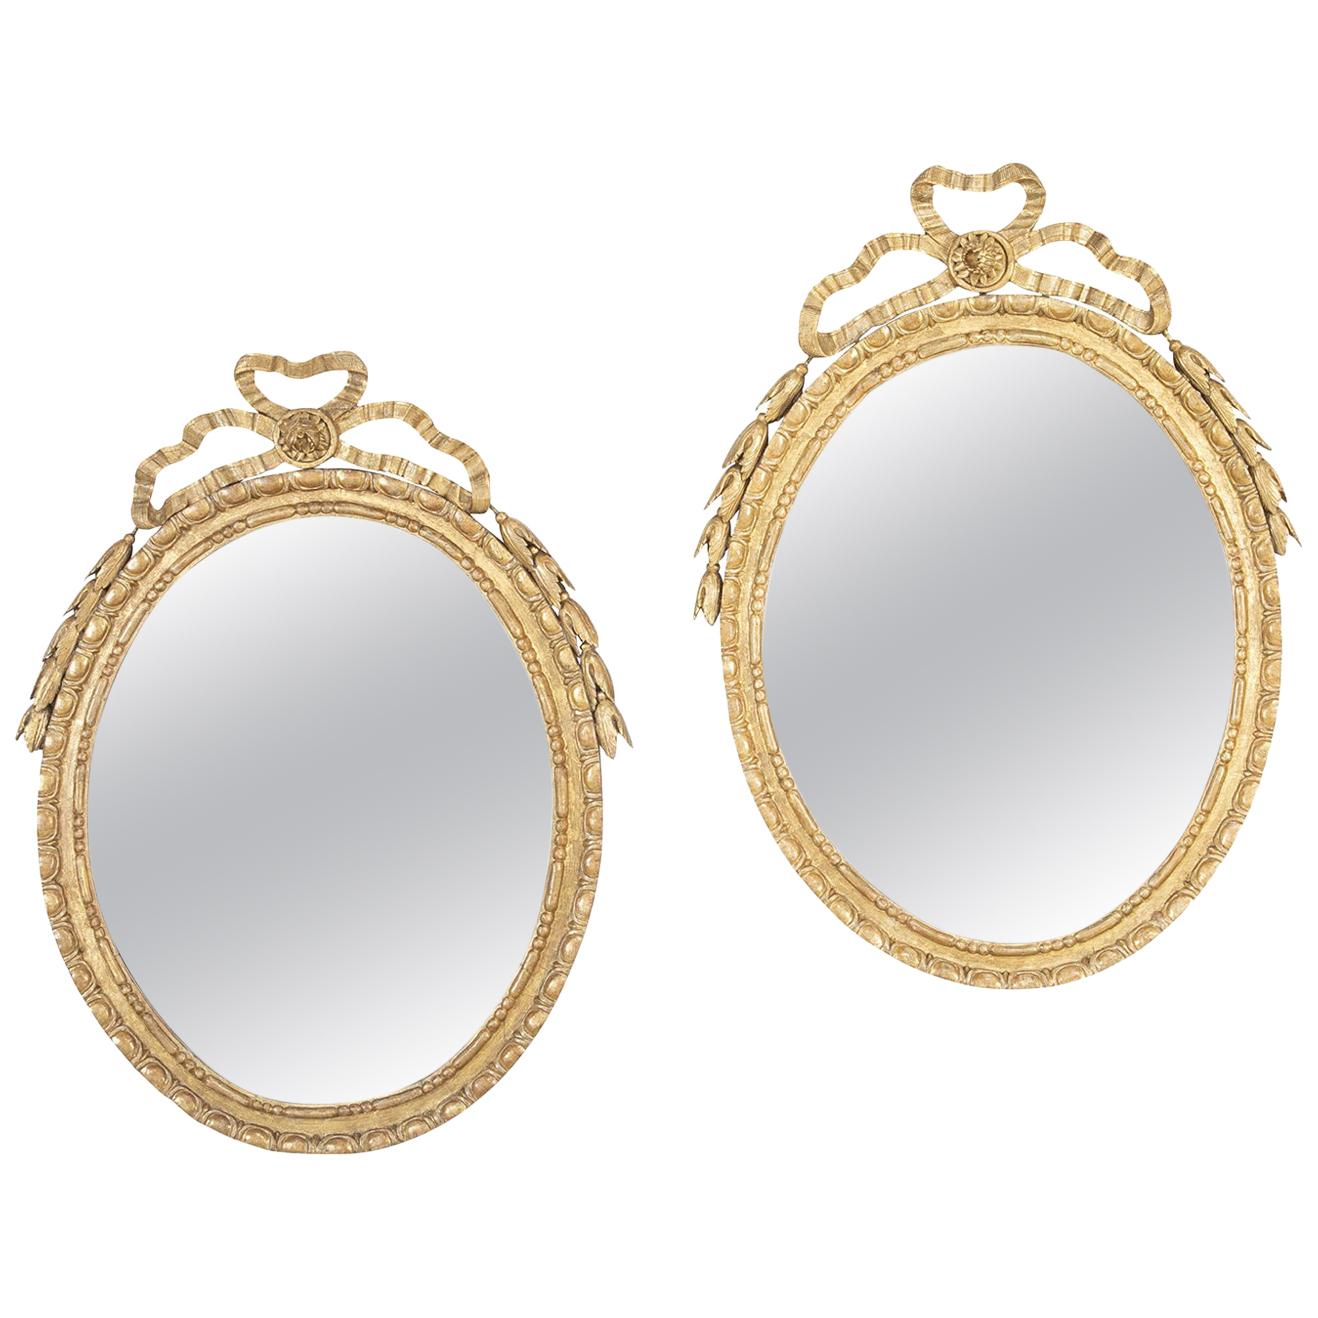 Pair of George III Oval Giltwood Mirrors